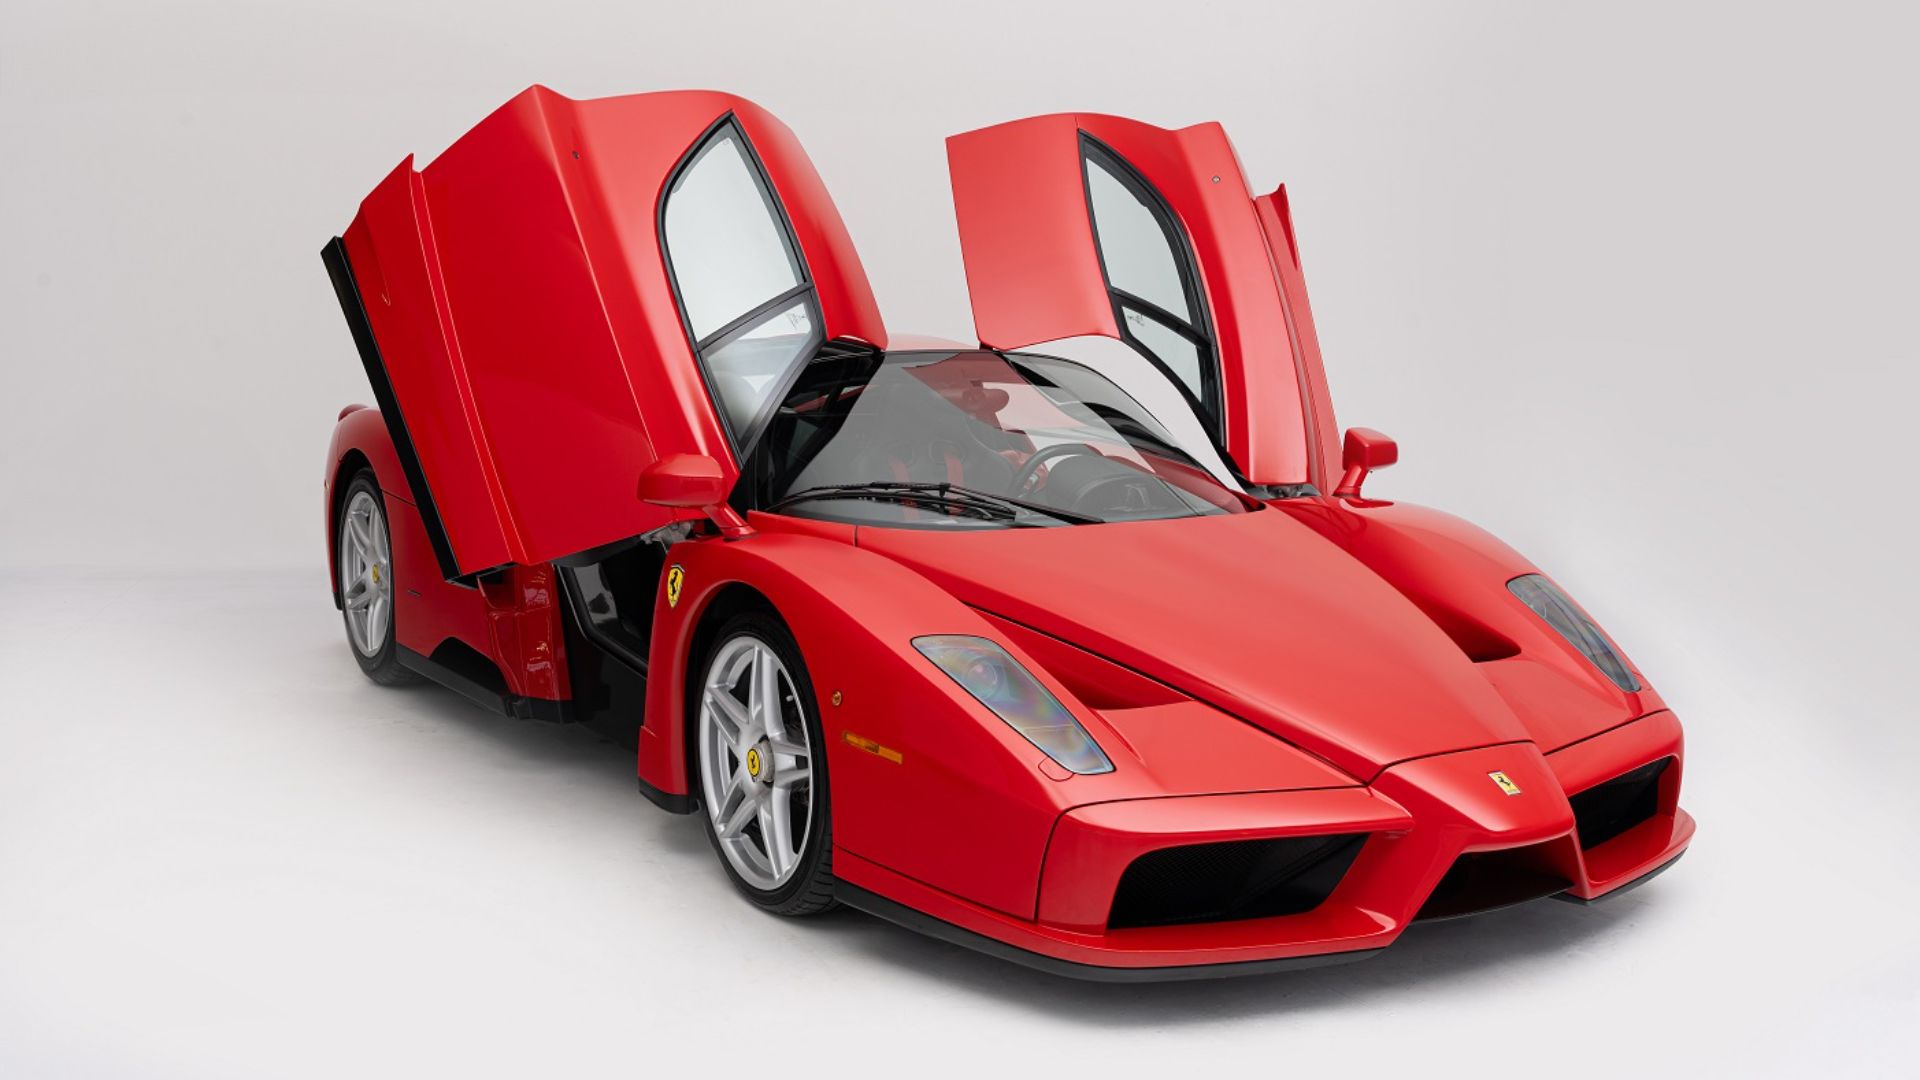 Ferrari Enzo and 275 GTS to Headline L’AstaRossa Ferrari-Themed Sale at Monaco Car Auctions